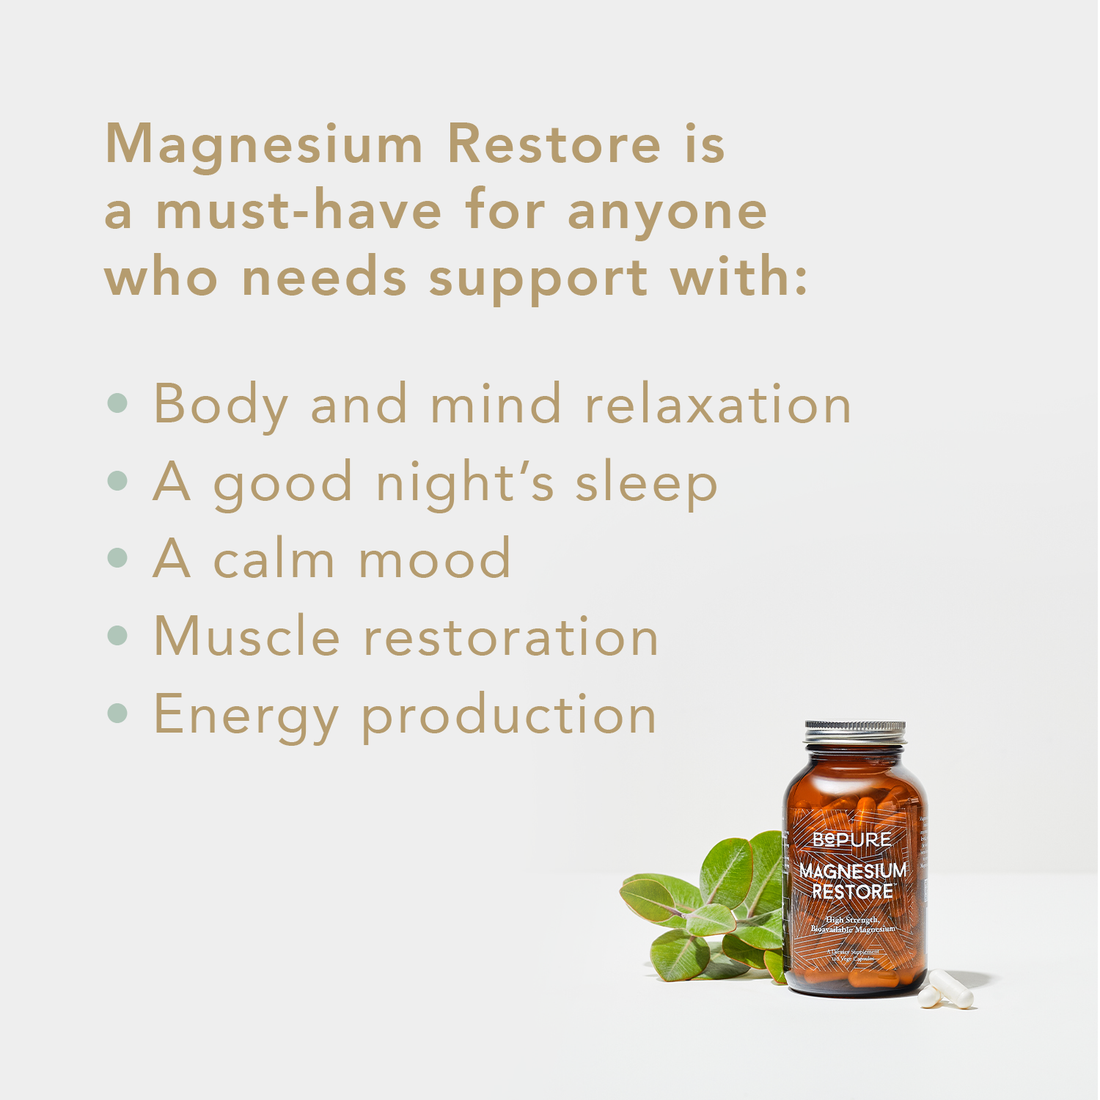 BePure Magnesium Restore 60 Day Supply